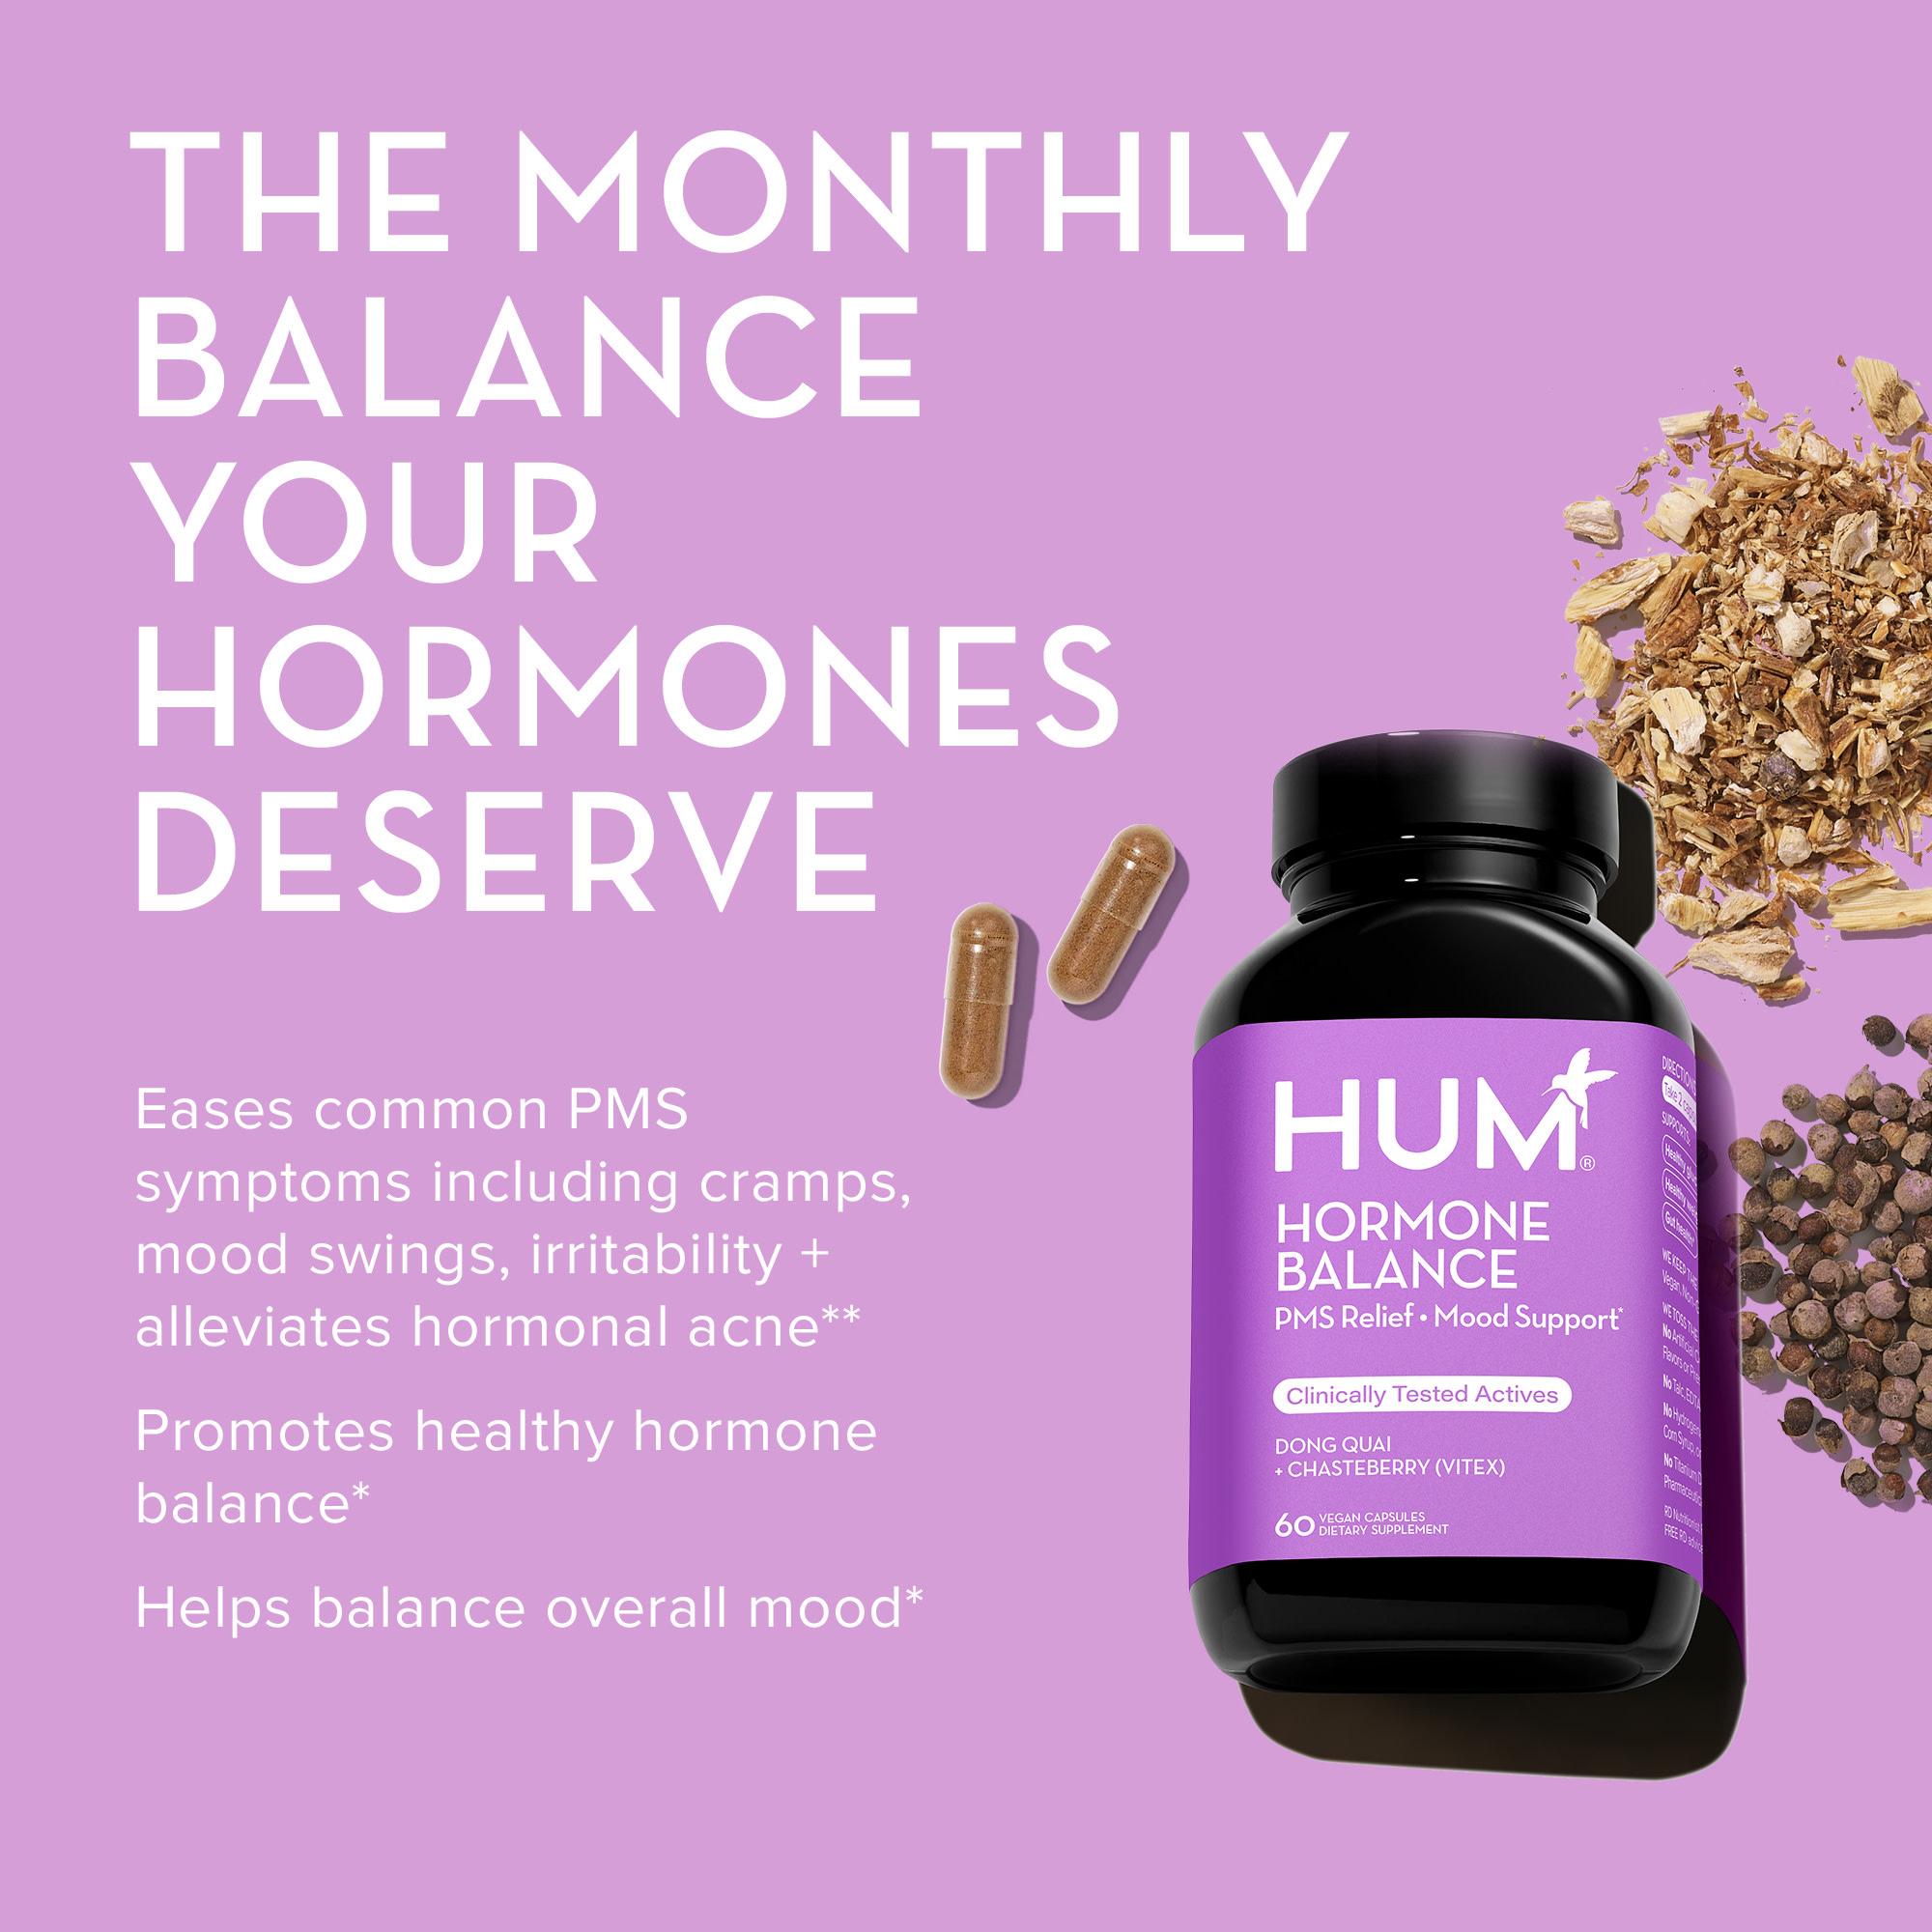 Best supplements and vitamins to balance hormones - Women's Health